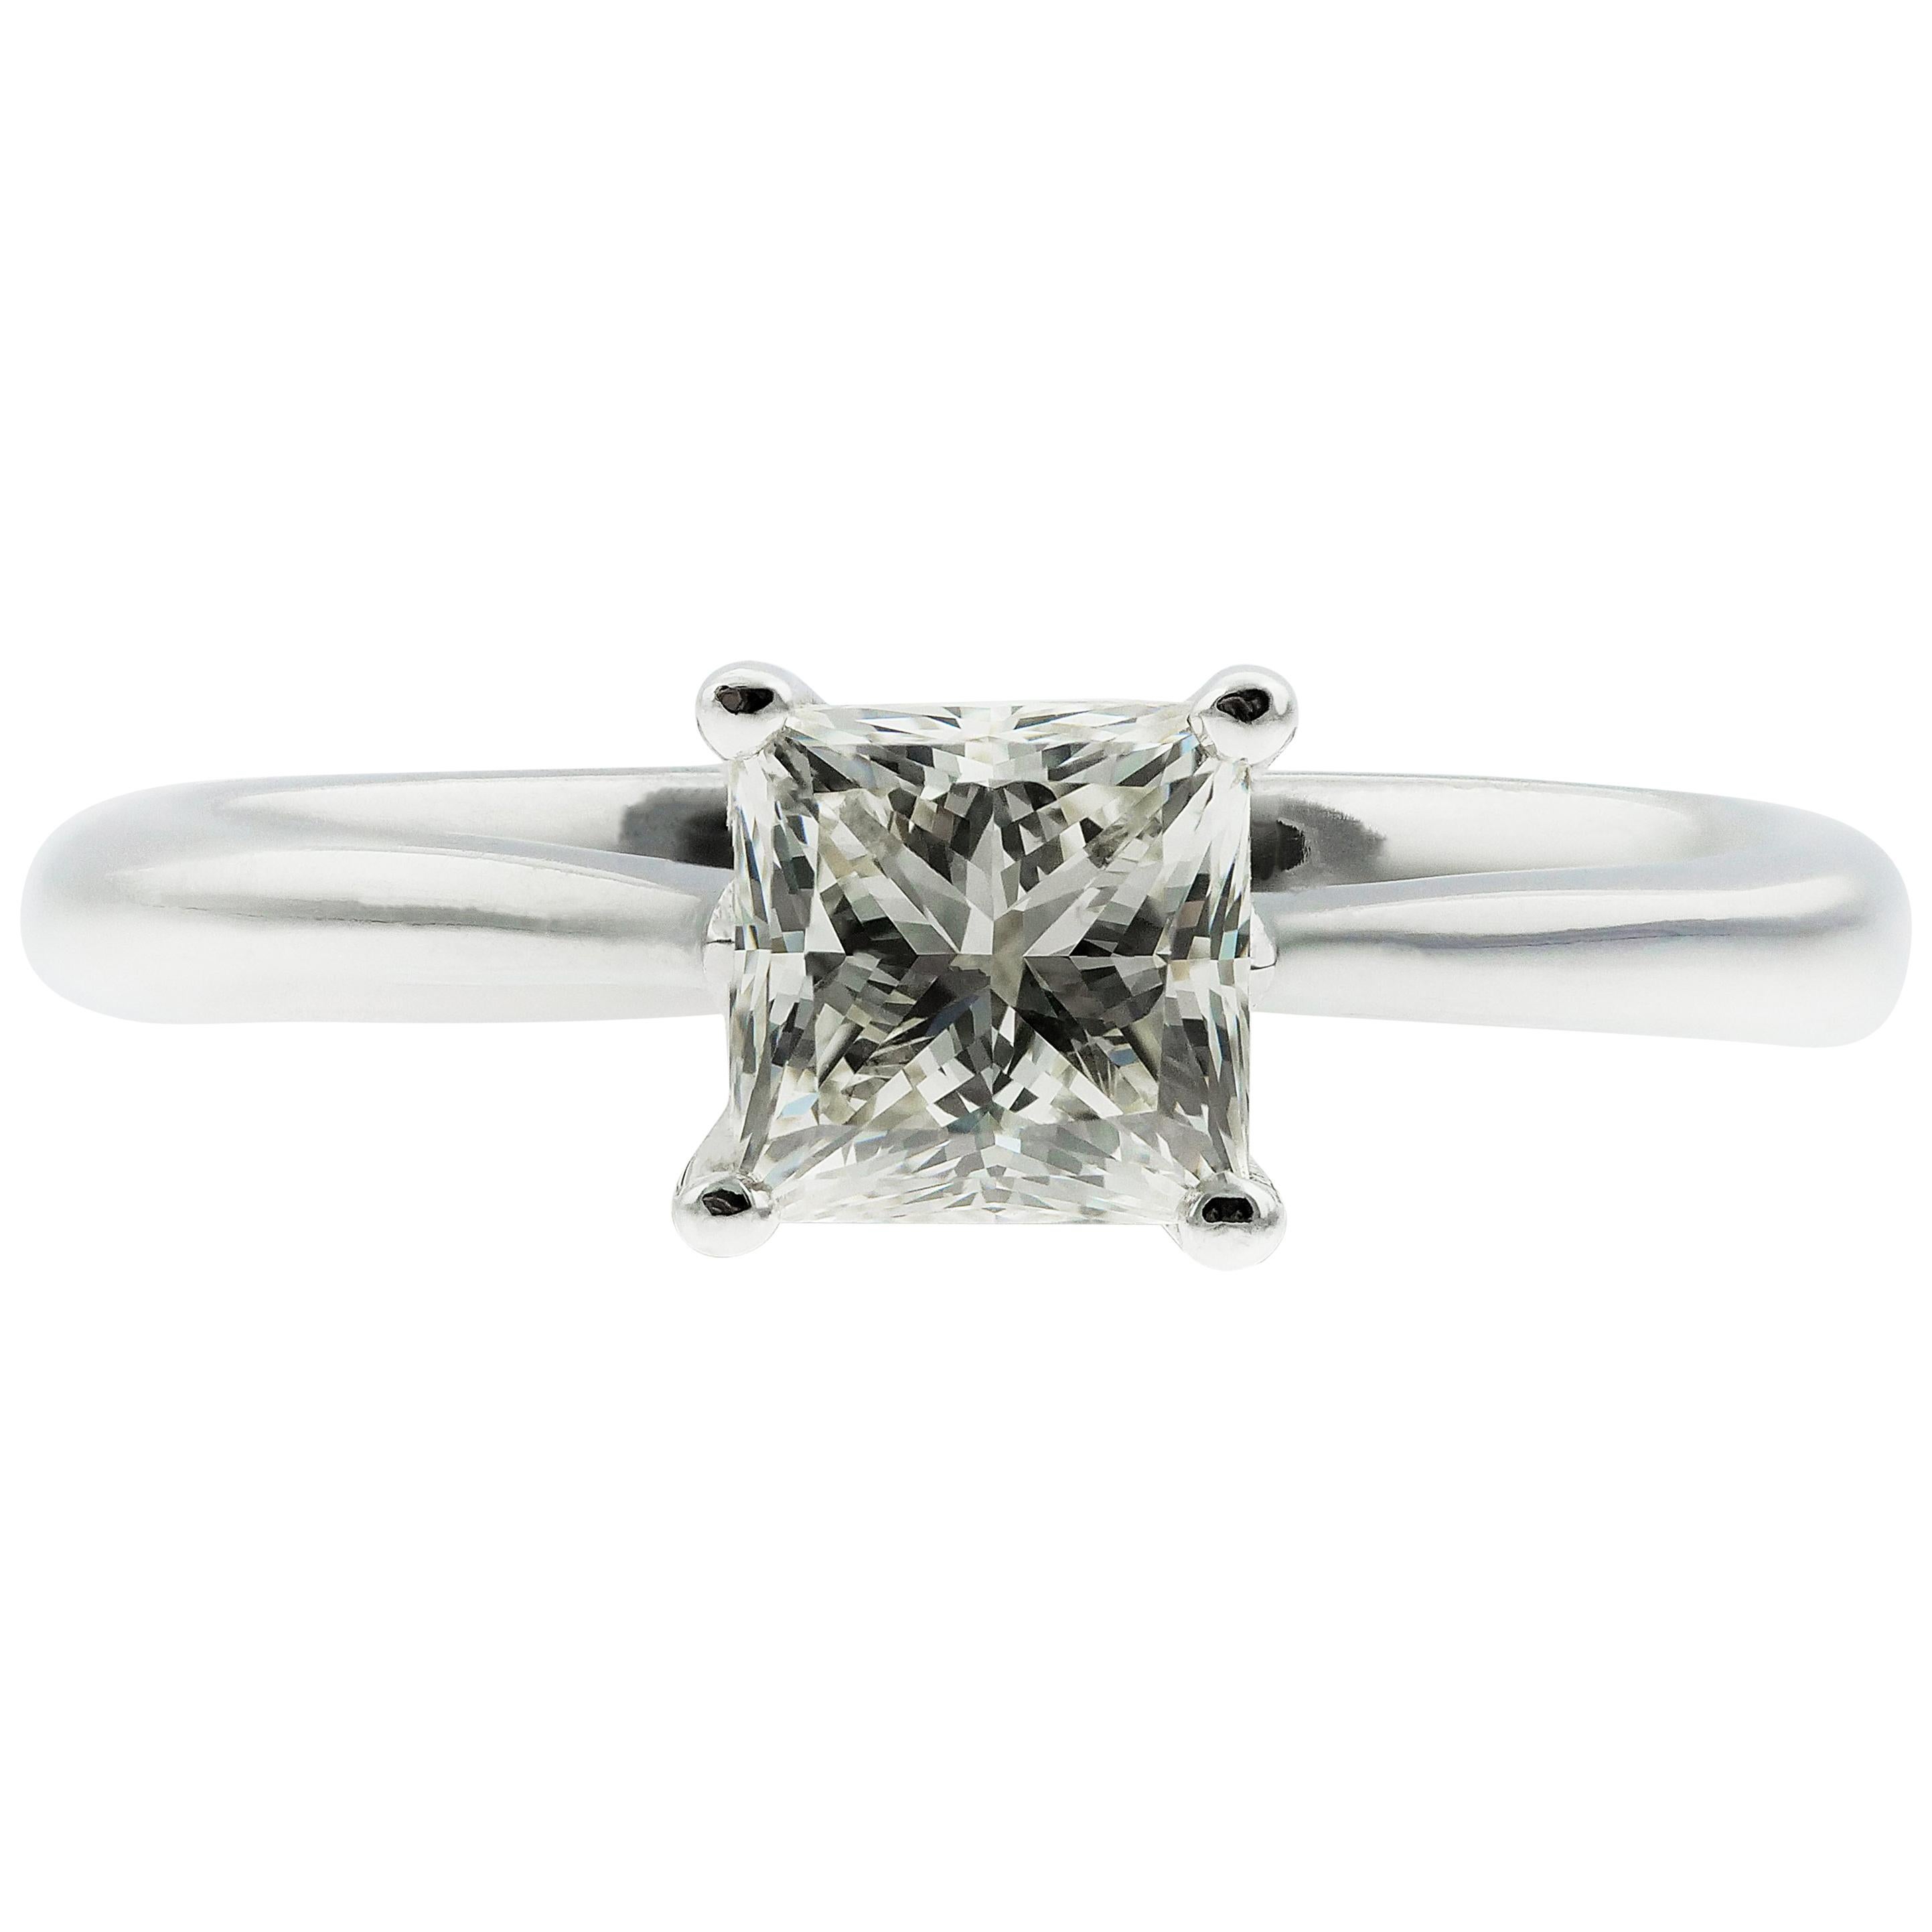 GIA Certified 0.92 Carat J VS1 Princess Cut Diamond Single Stone/Solitaire Ring